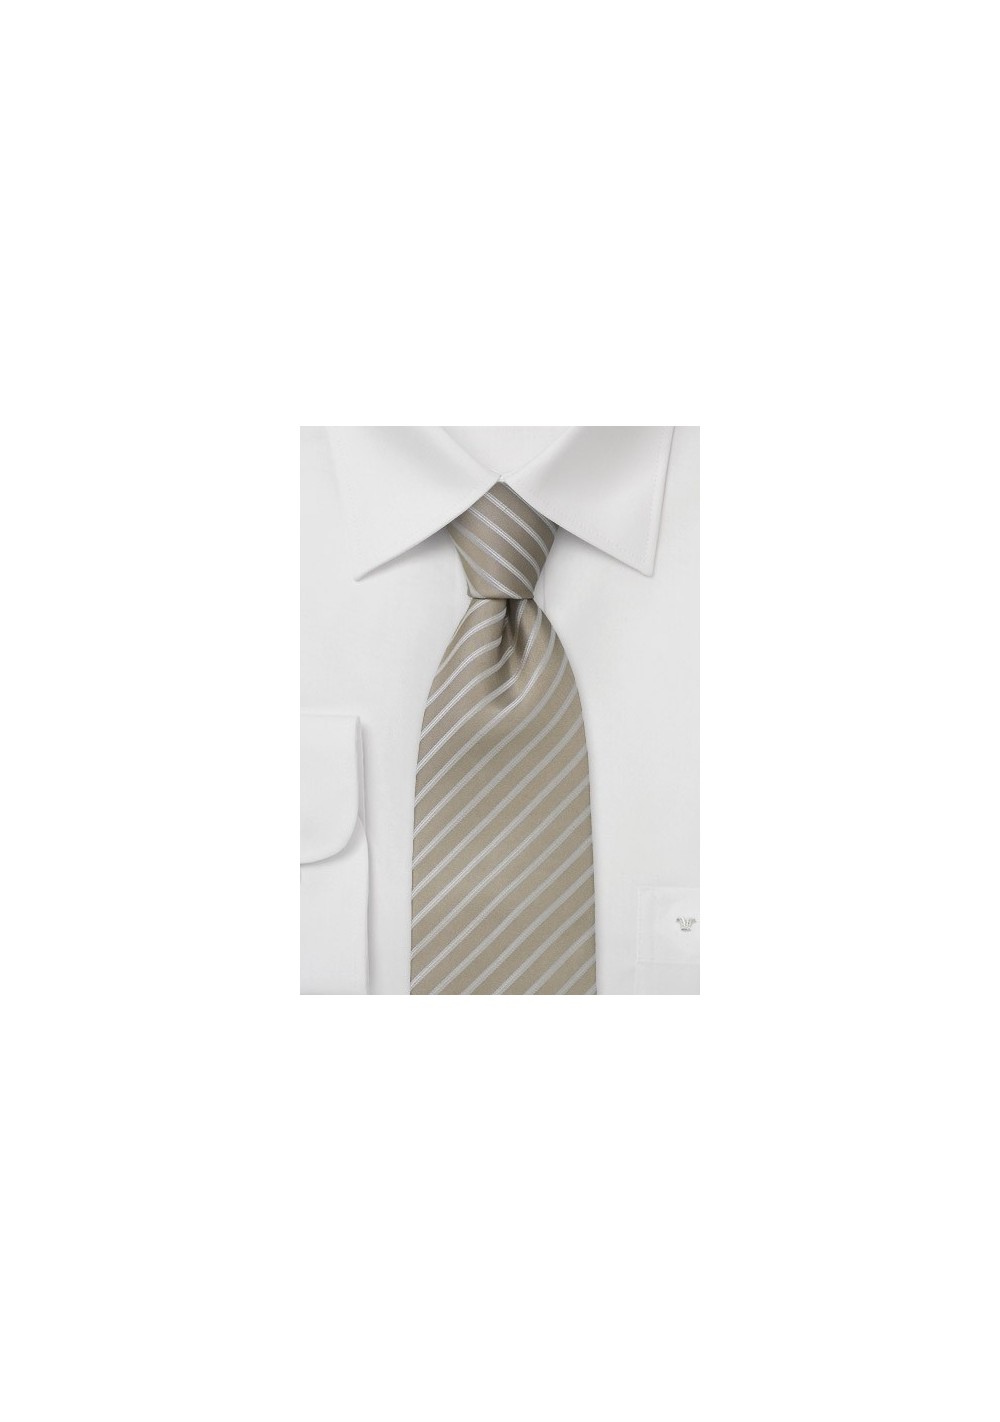 Tan color silk tie with narrow stripes